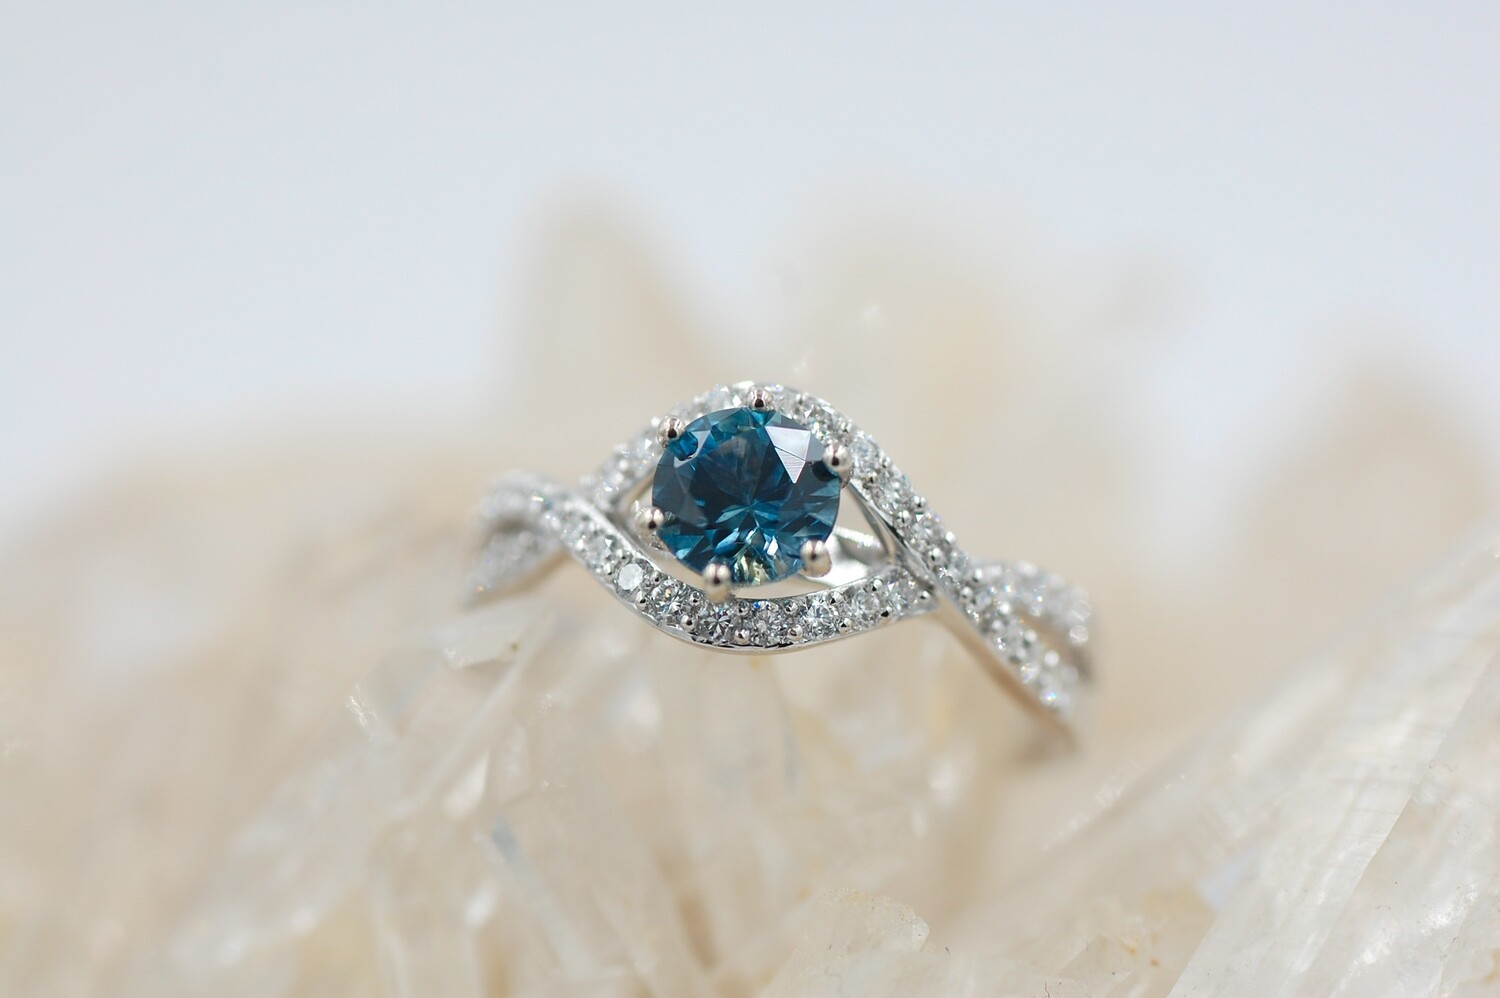 MT sapphire/diamond bridal set - 14kw (3/4ct saph/1/3cttw diamonds)